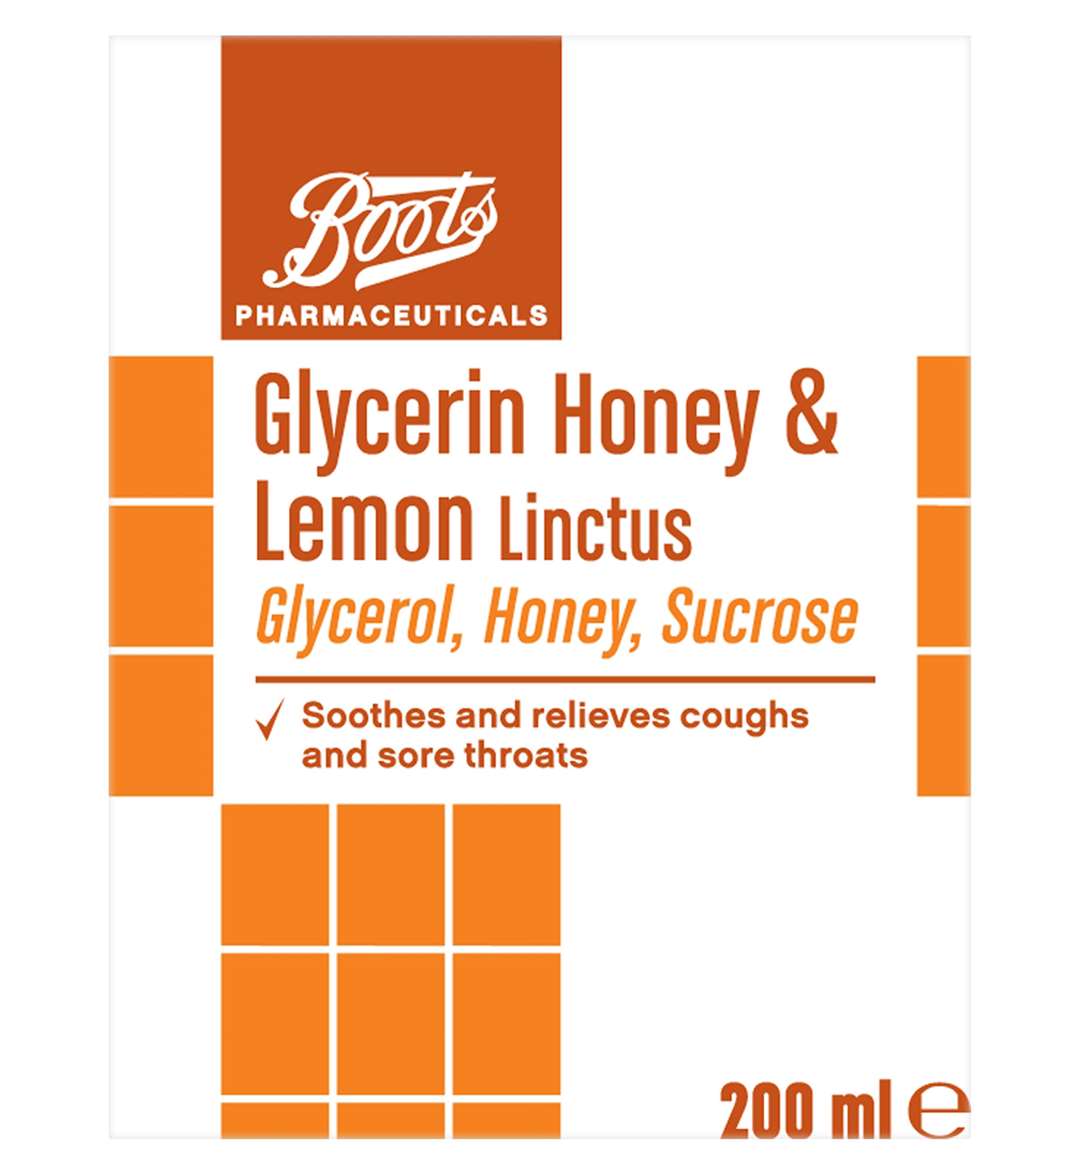 Boots Pharmaceuticals Glycerin Honey & Lemon Linctus